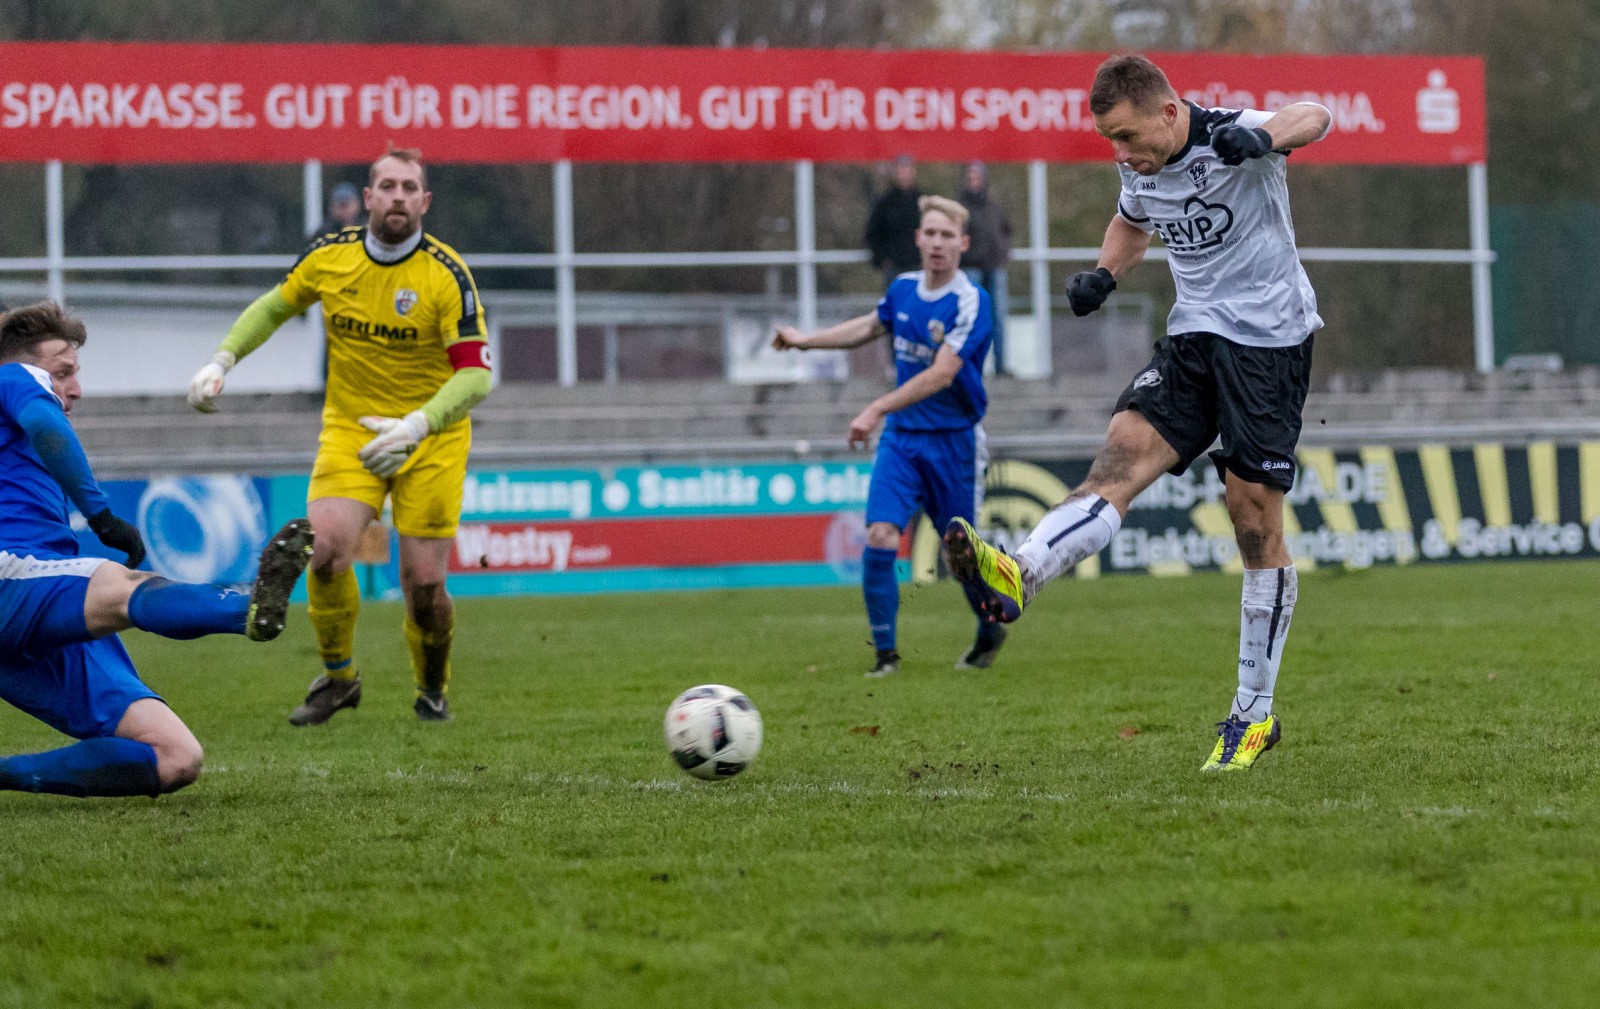 Da kommt jeder Gegner zu spät: VfL-Stürmer Ronny Kreher auf dem Weg zum Tor. Foto: Marko Förster